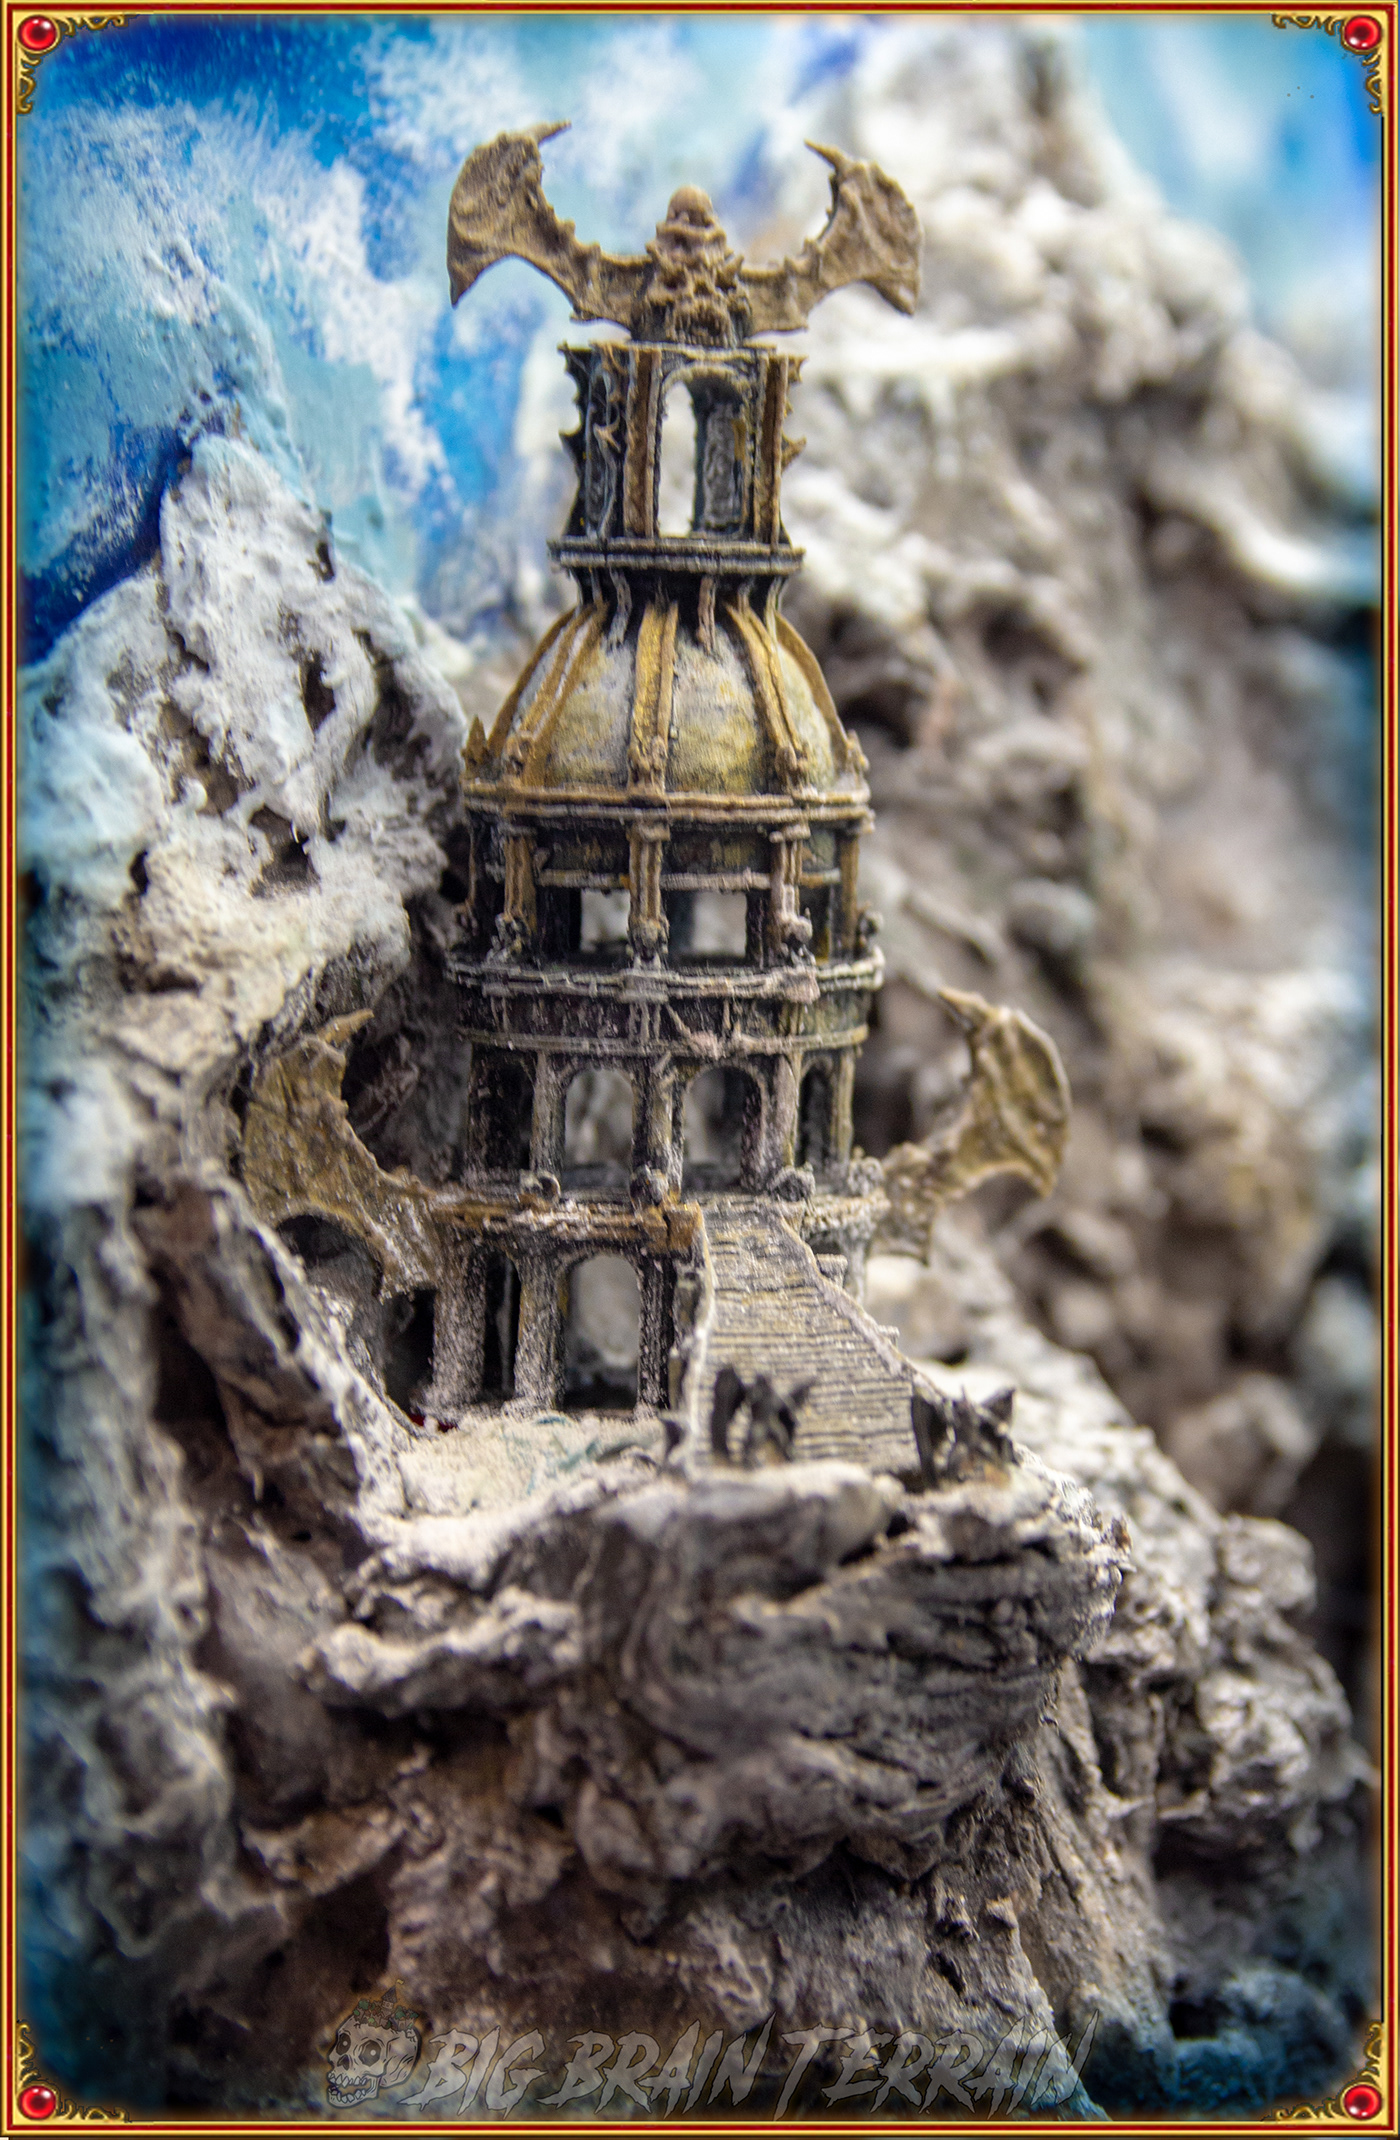 3d modeling 3d printing Render architecture fantasy Diorama craft handmade medieval Games